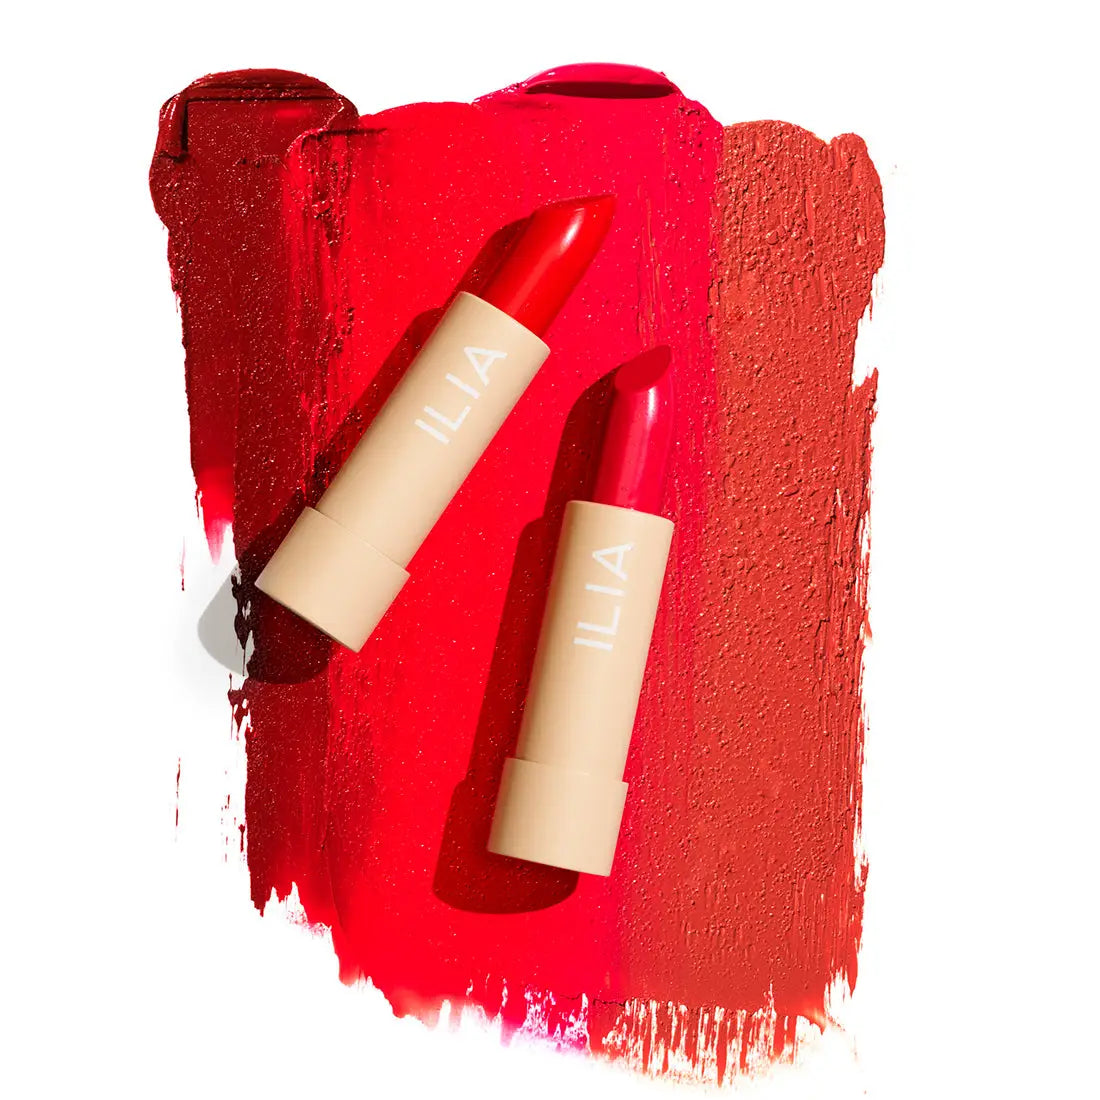 Ilia Beauty Color Block Lipstick, 4g - Amberlight